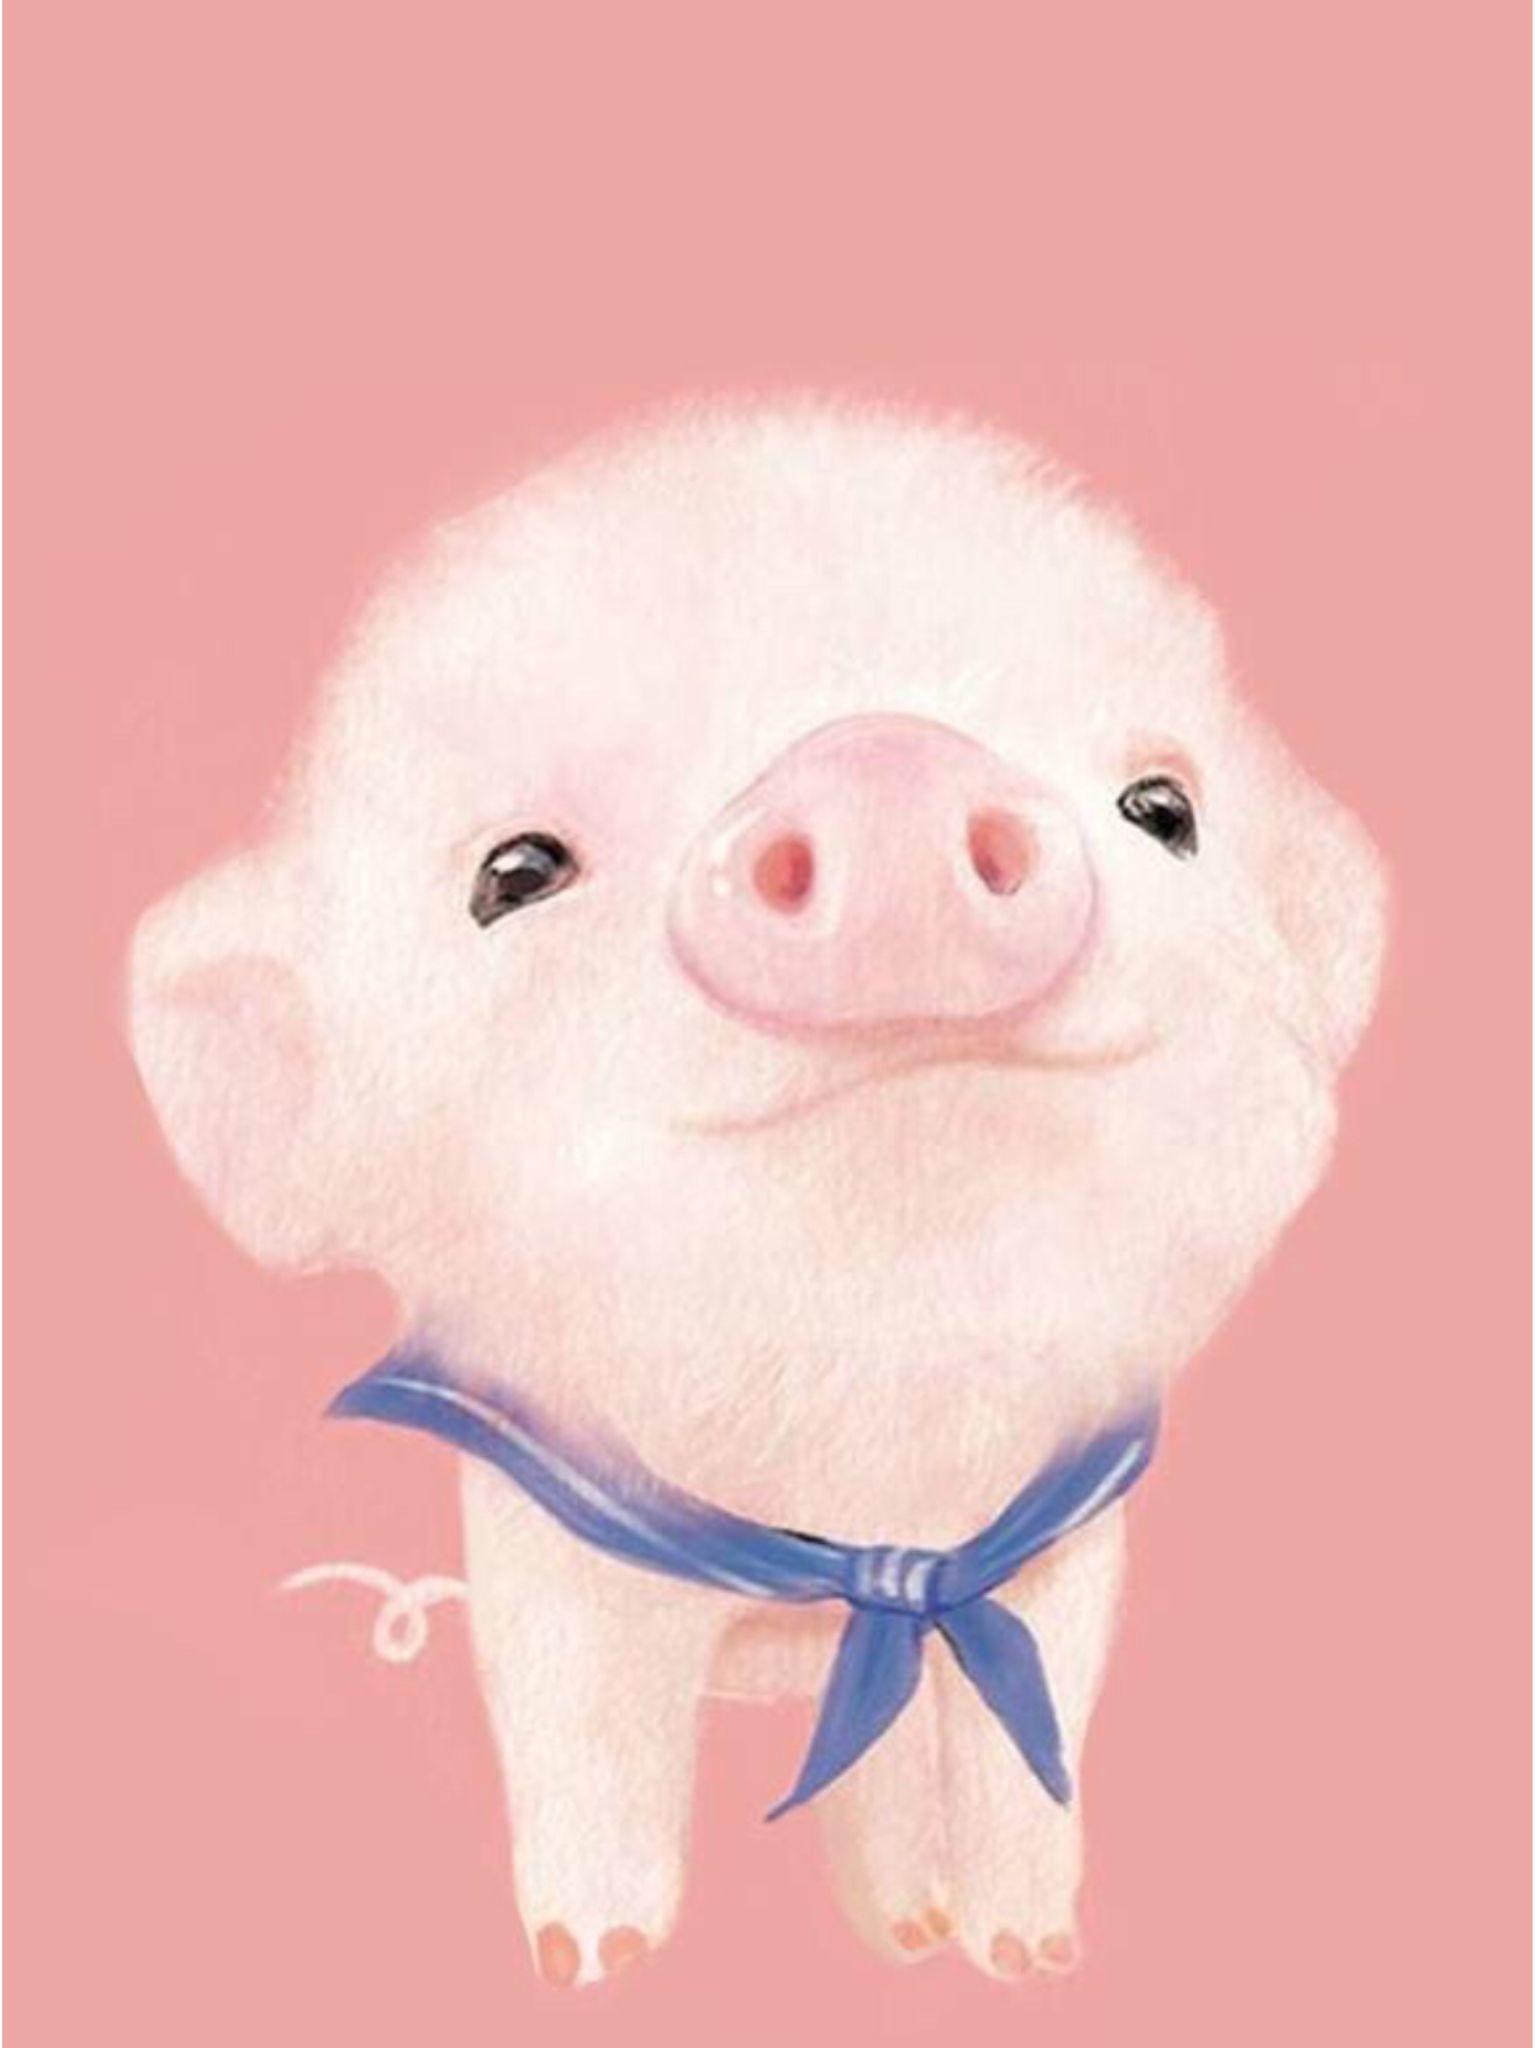 Pig Screensaver Wallpaper